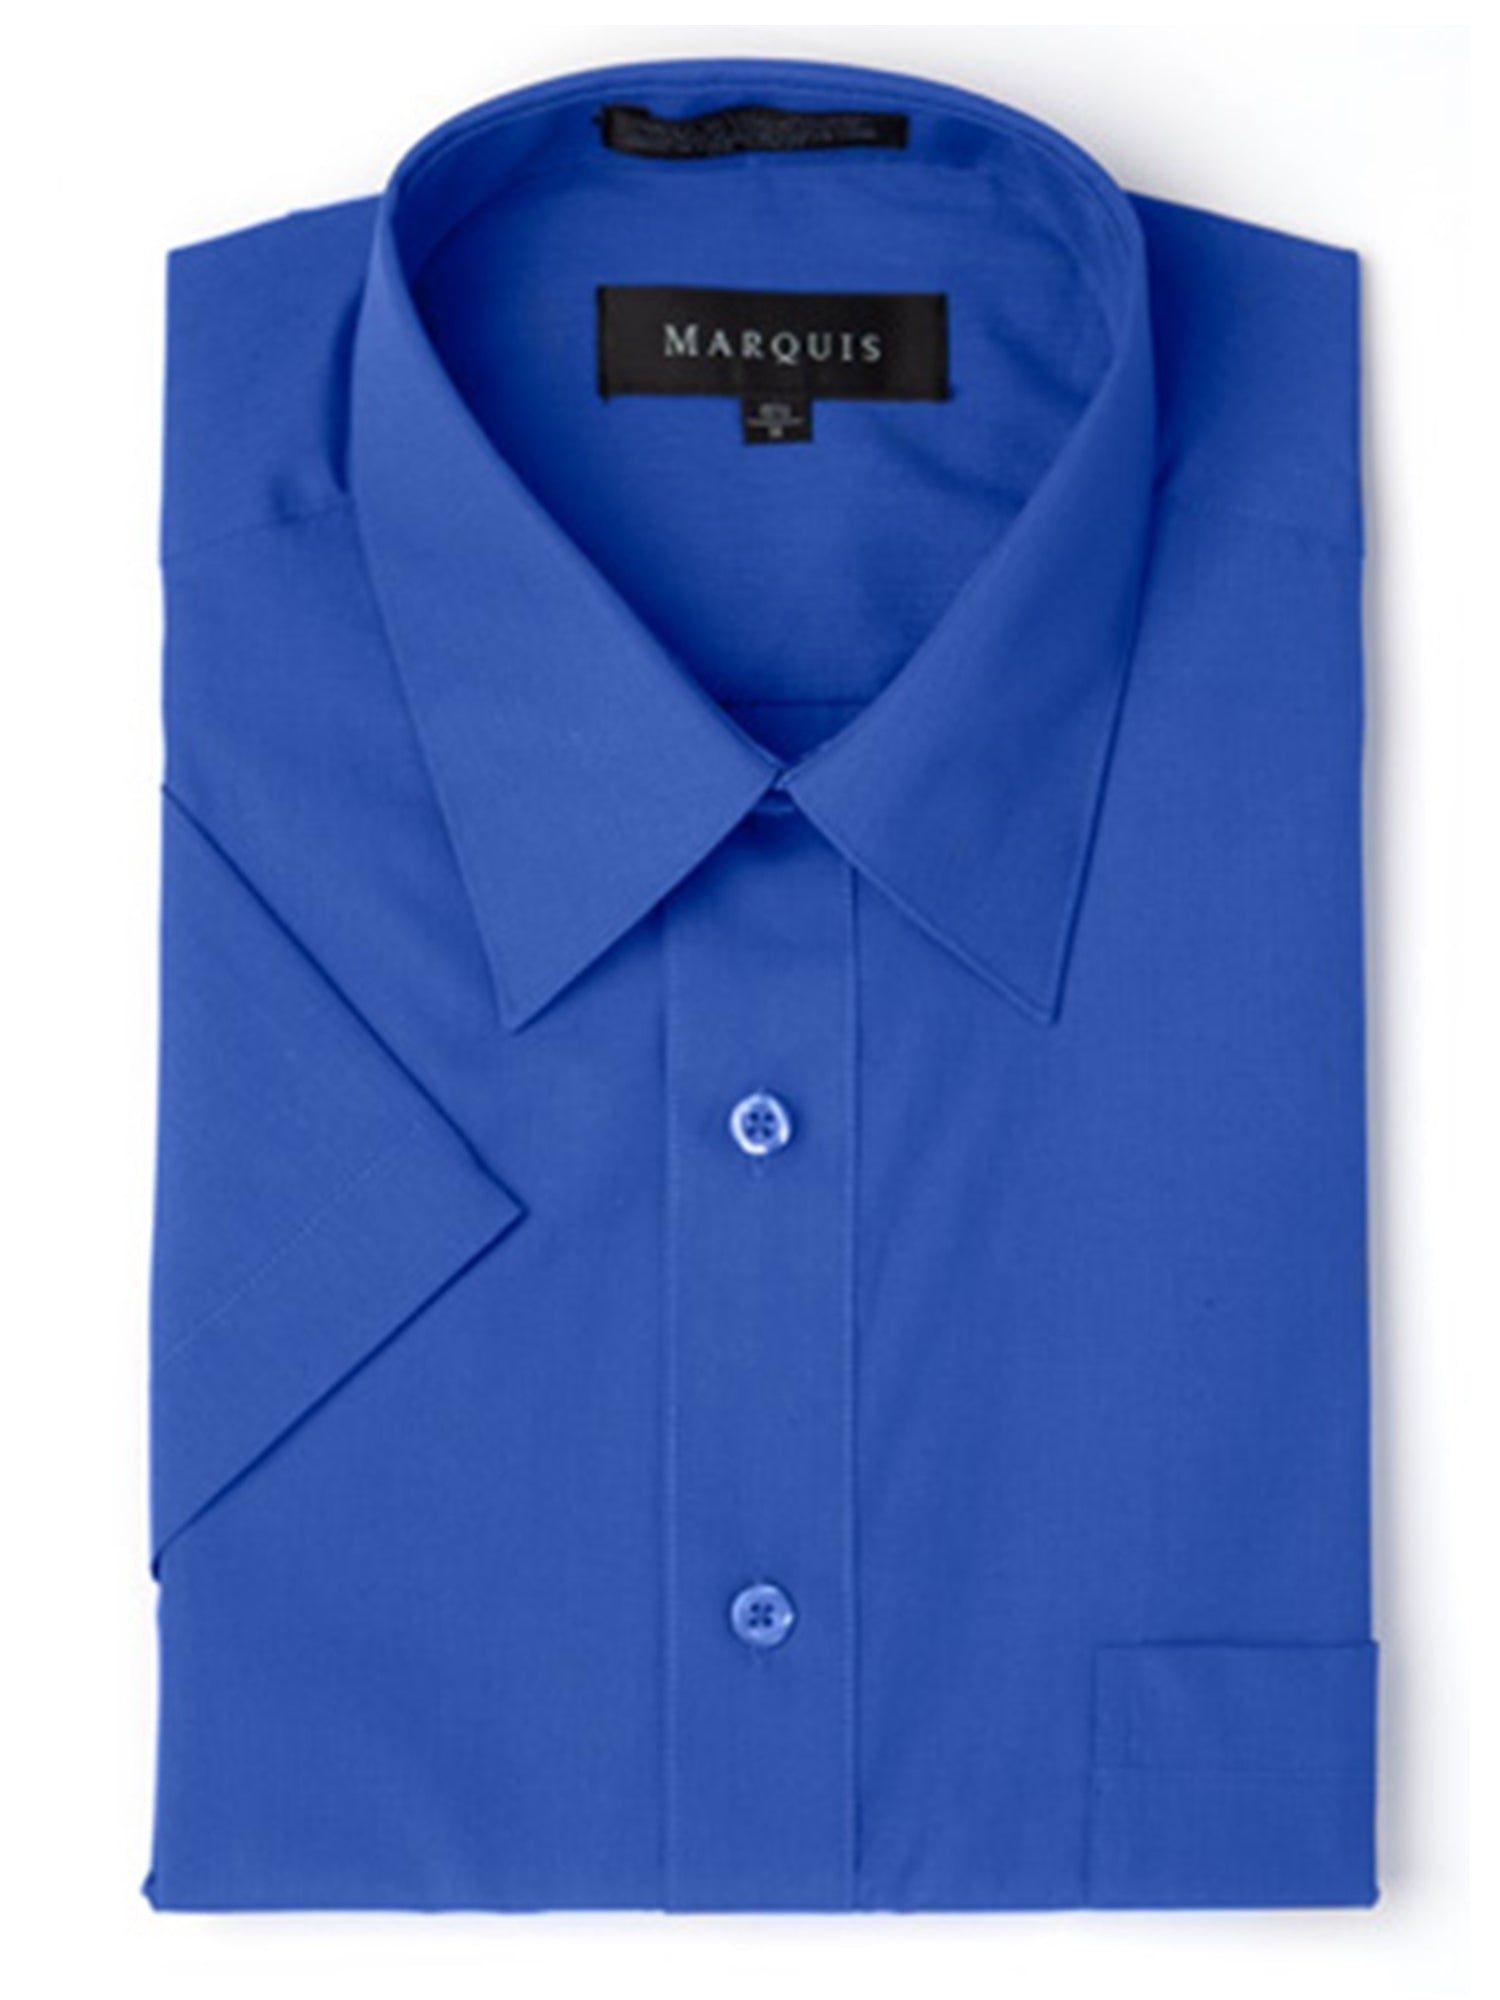 Marquis Men's Short Sleeve Regular Fit Dress Shirt - S To 4XL Men's Dress Shirts Marquis Royal Blue XX-Large/18.5 